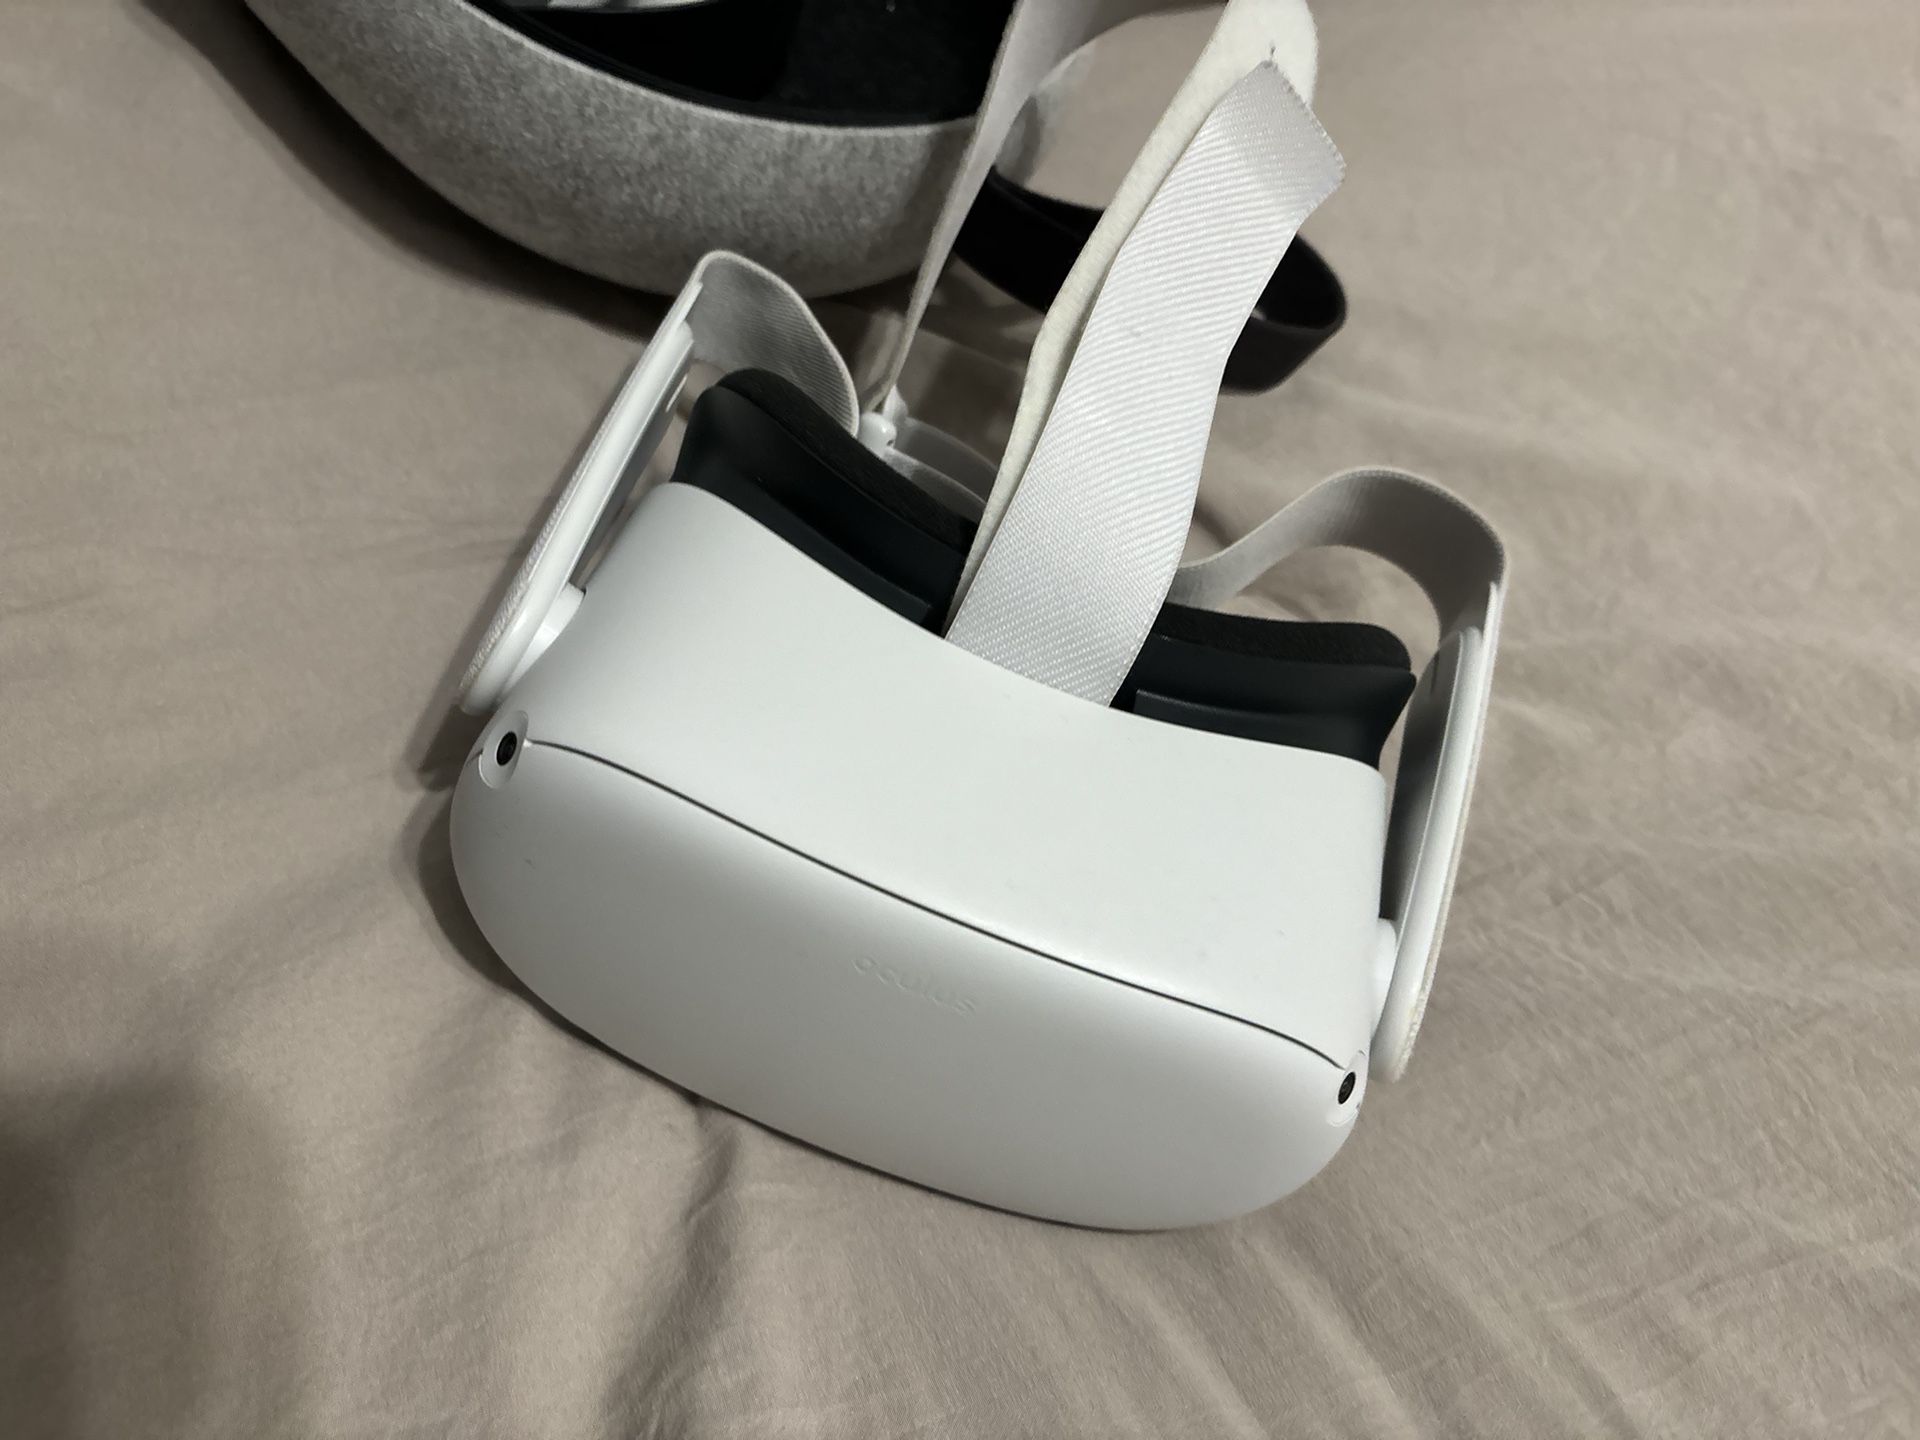 VR Headset 